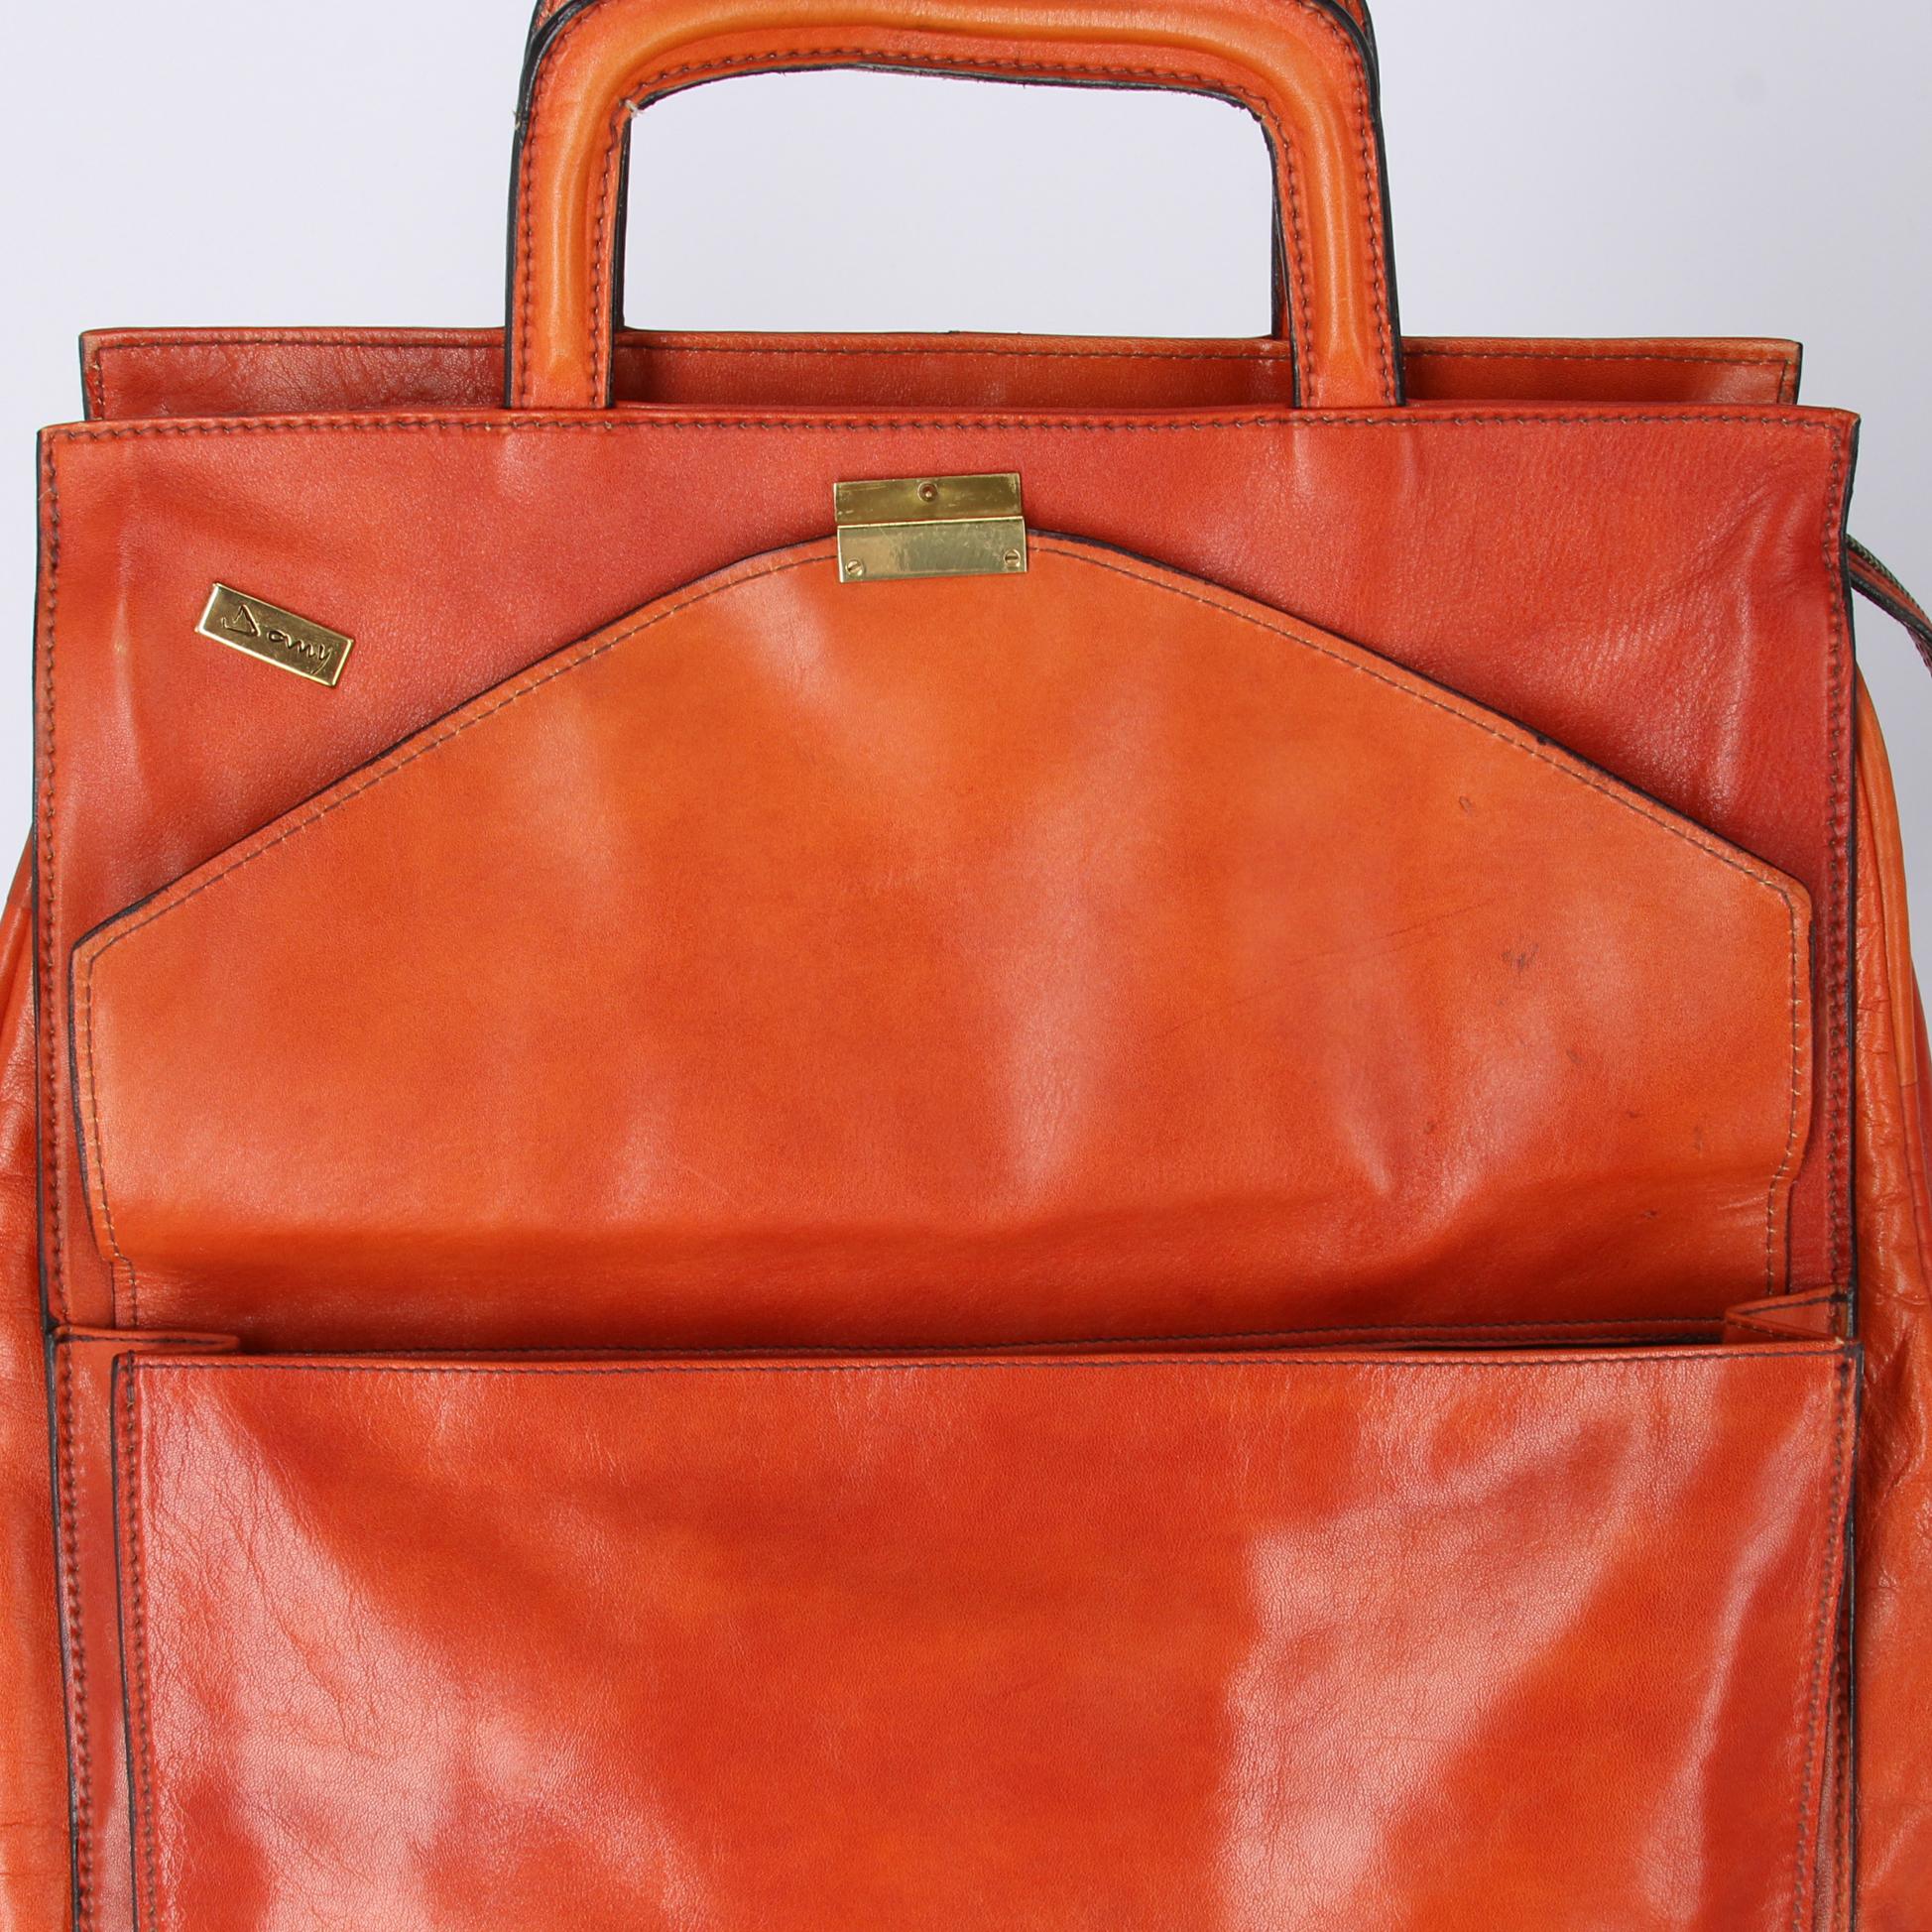 patchwork coach purse